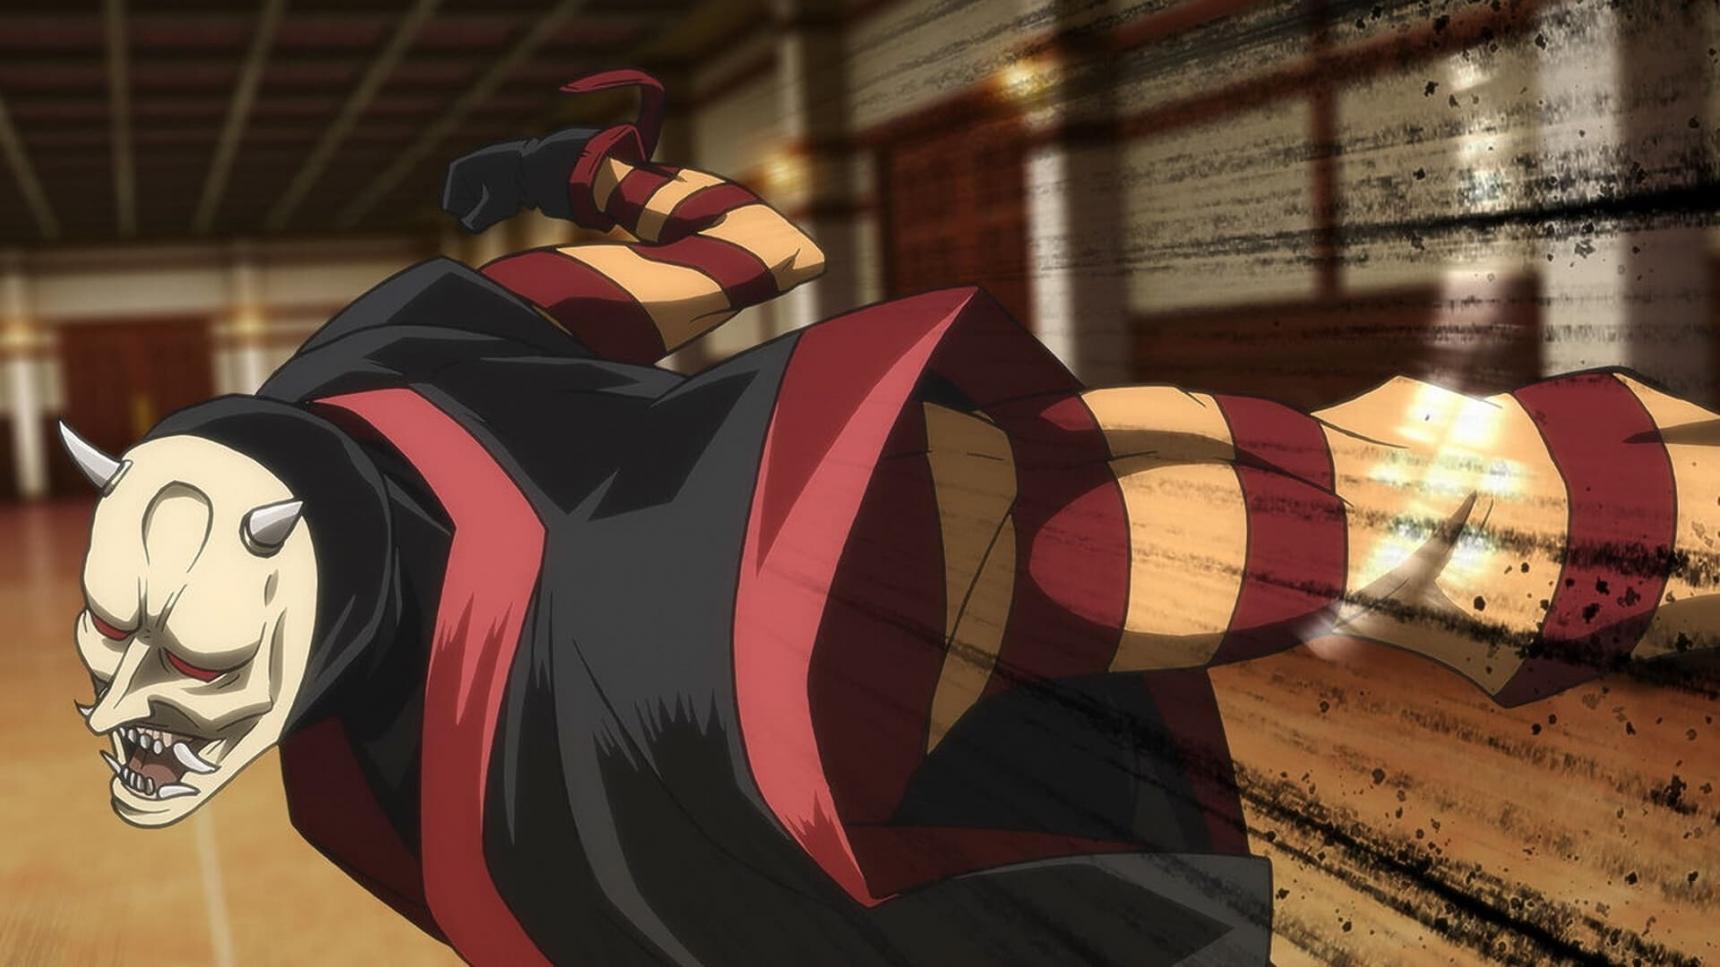 Poster del episodio 11 de Rurouni Kenshin: Meiji Kenkaku Romantan online